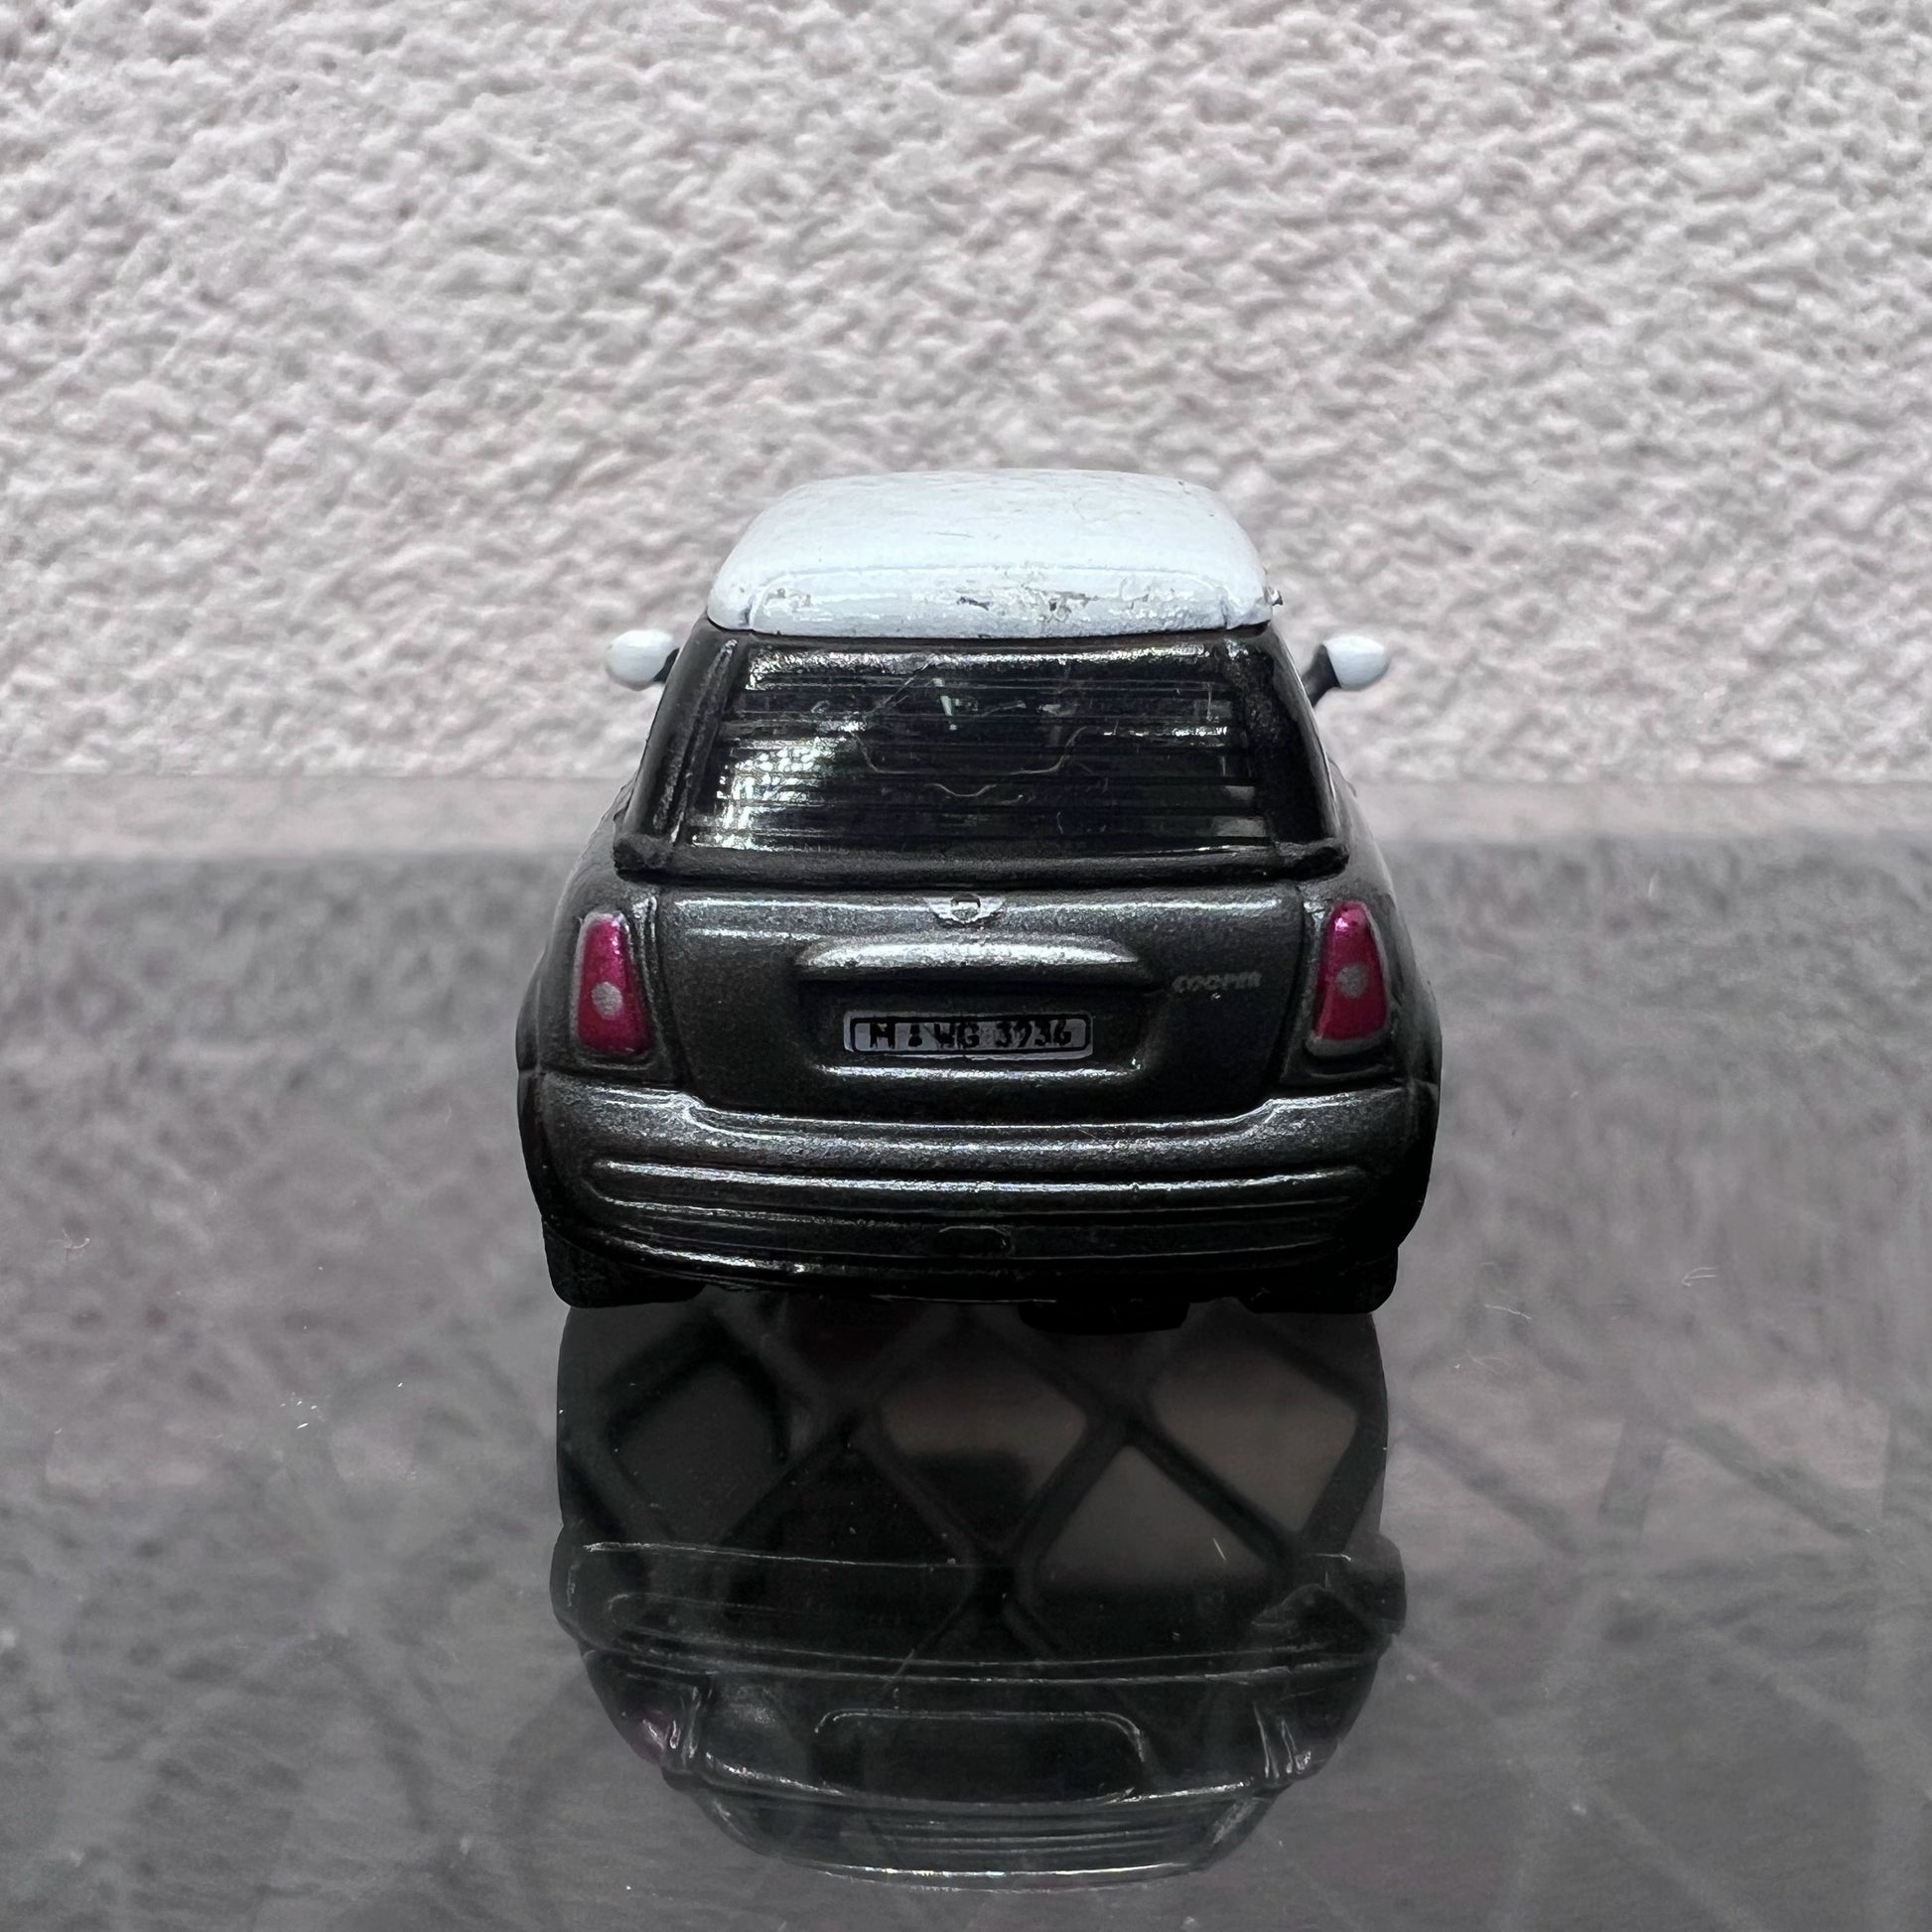 1/72 Scale Mini Cooper Diecast Model Car